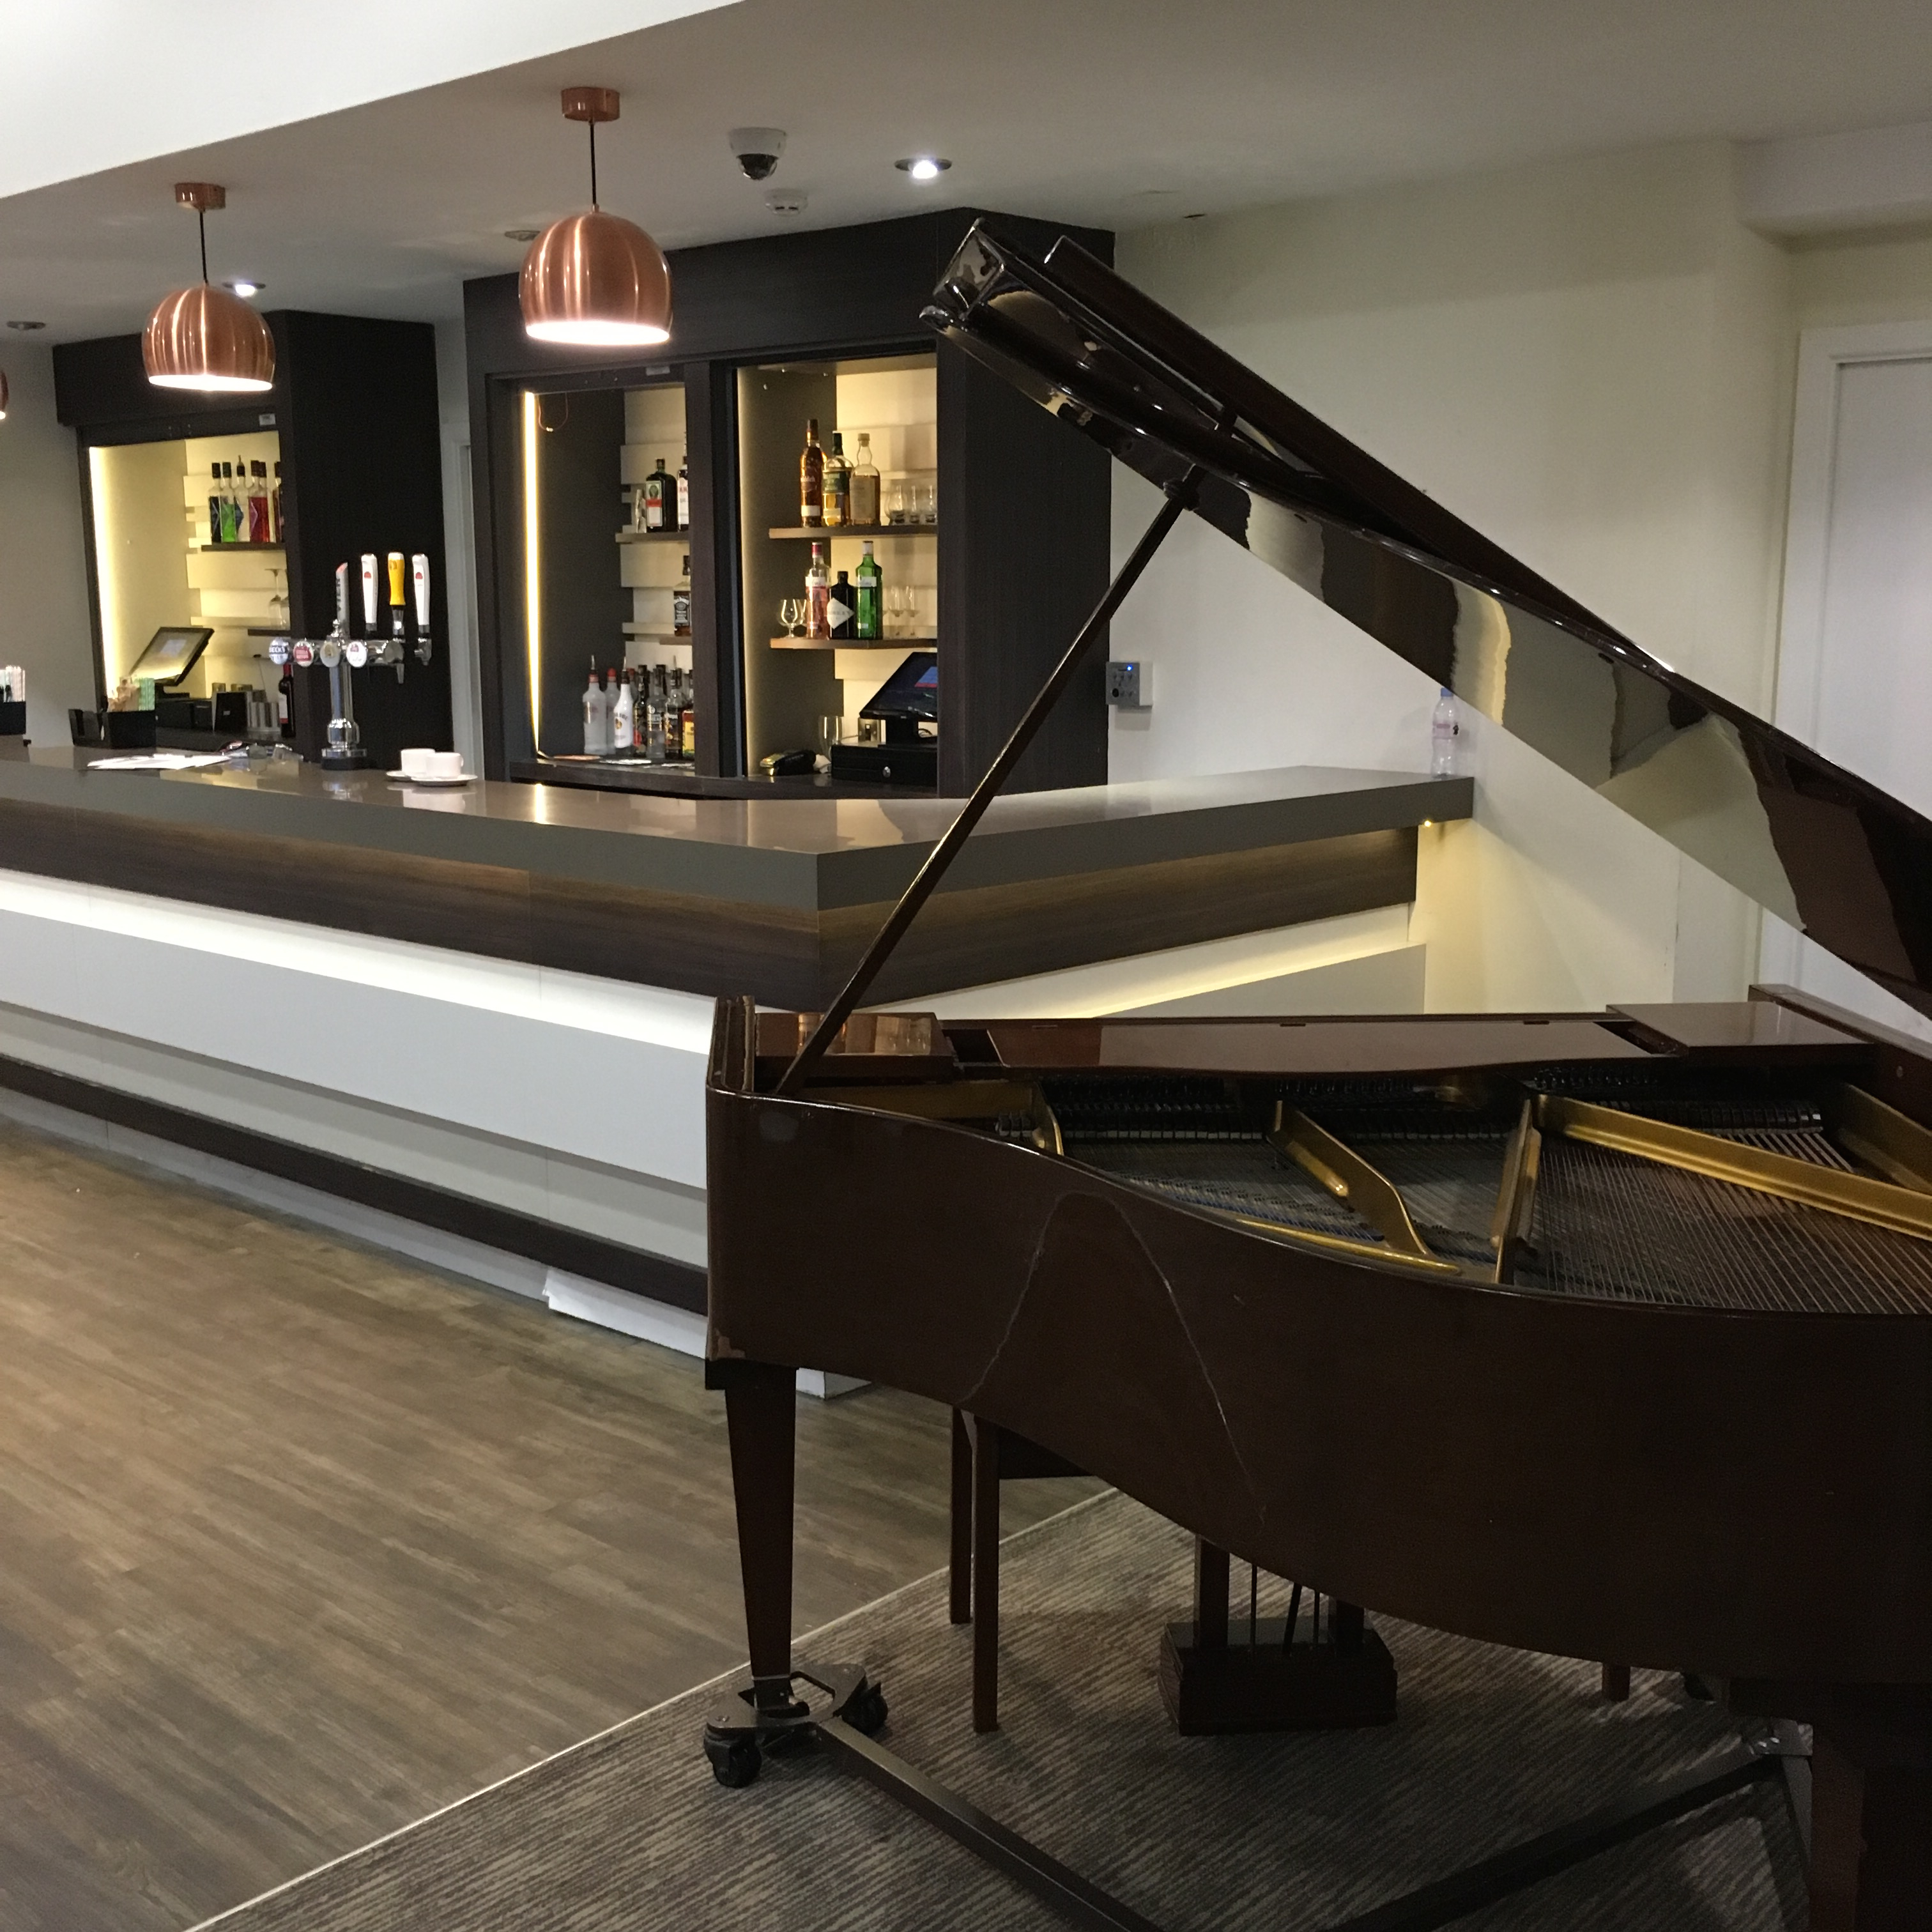 Samlesbury Hotel wedding piano for drinks reception piano entertainment